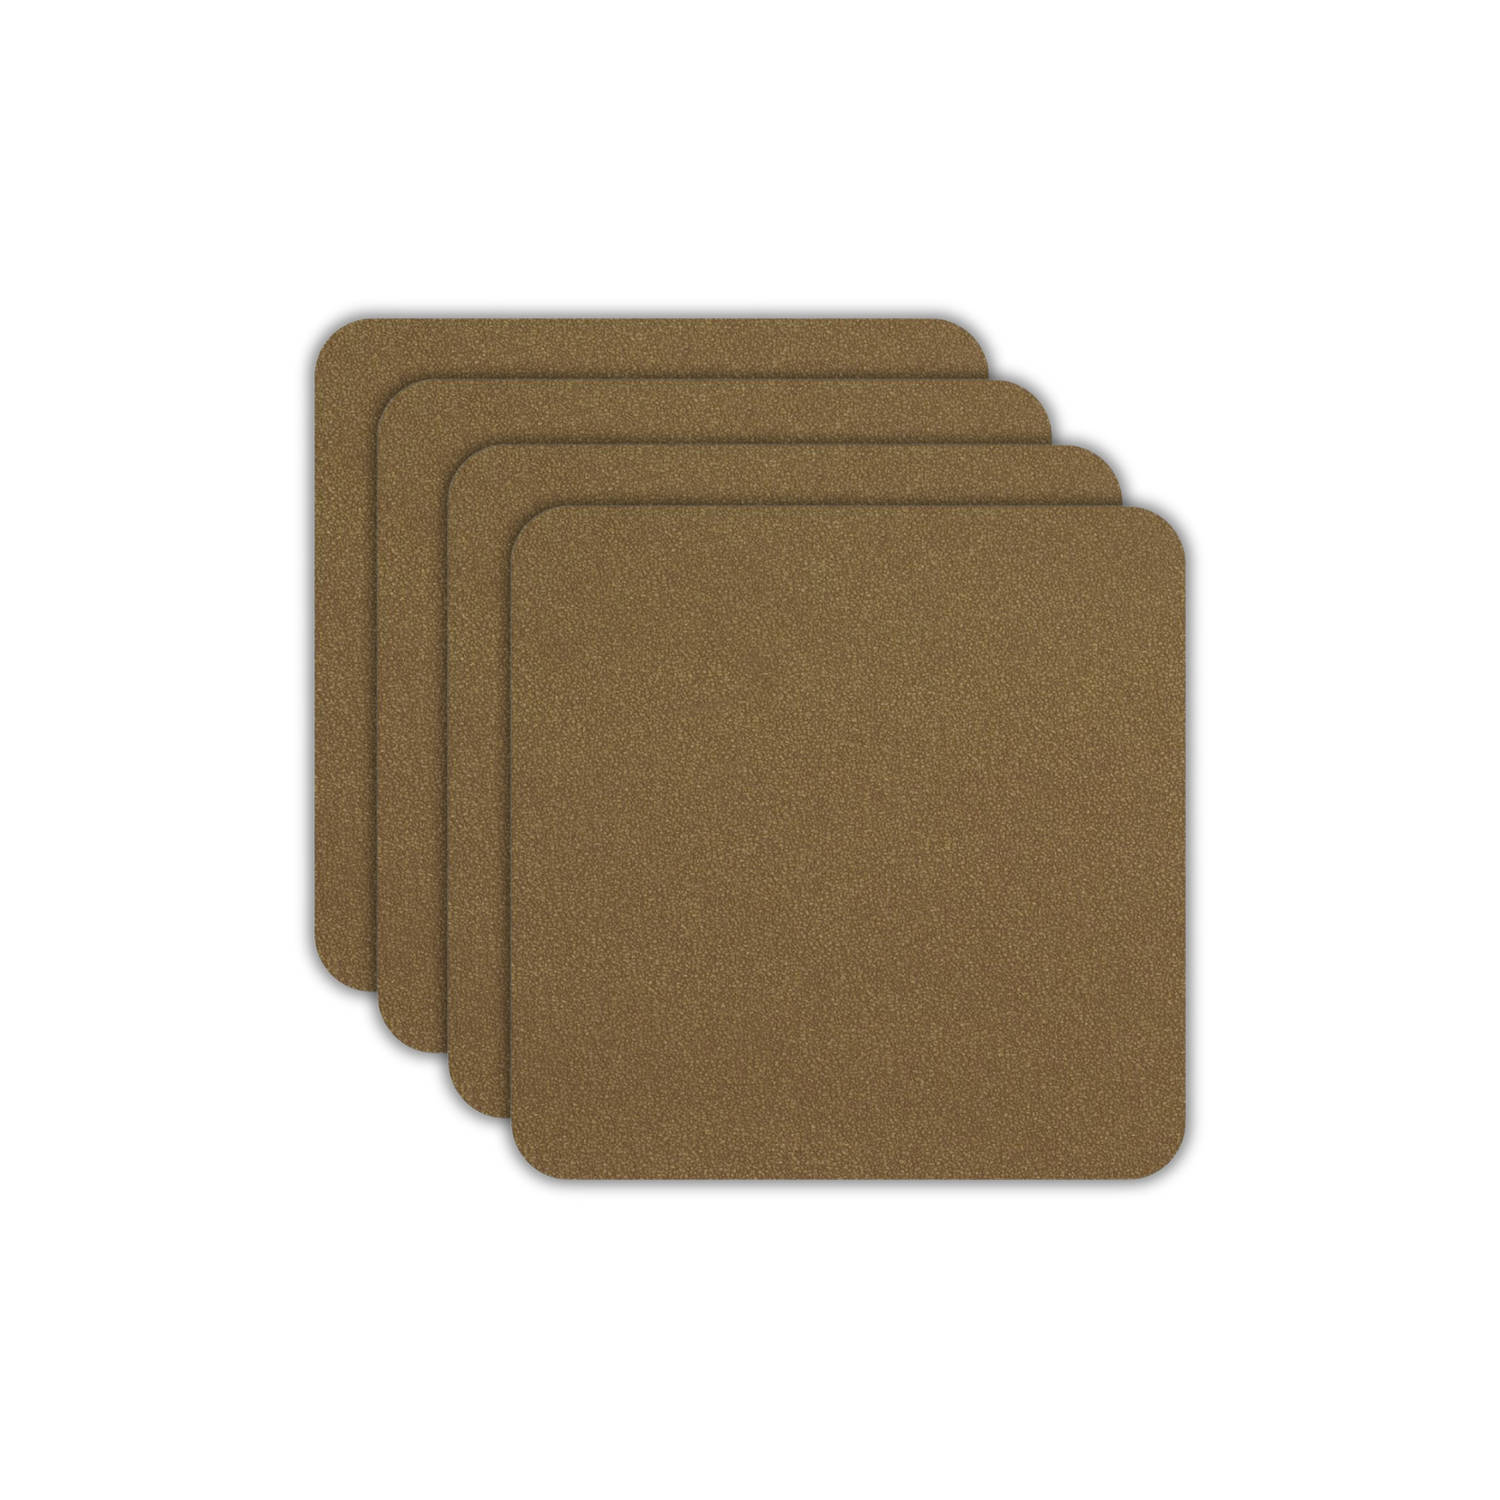 ASA Selection Onderzetters - Soft Leather - Cork - 10 x 10 cm - 4 Stuks